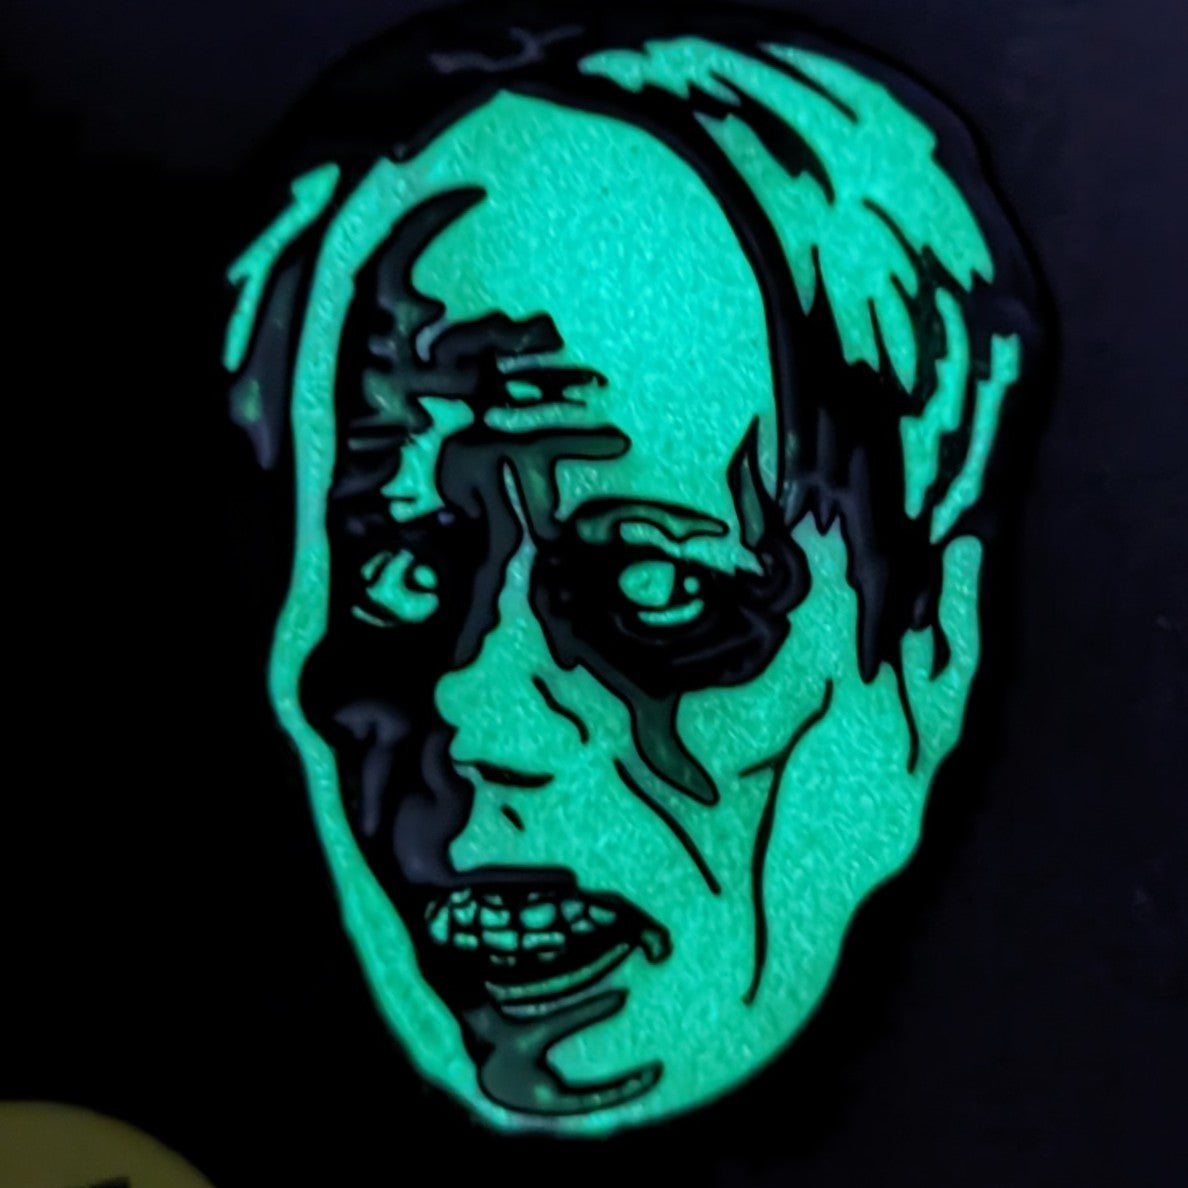 Glow-in-the-Dark Phantom of the Opera Pin - Lon Chaney Horror Enamel Pin